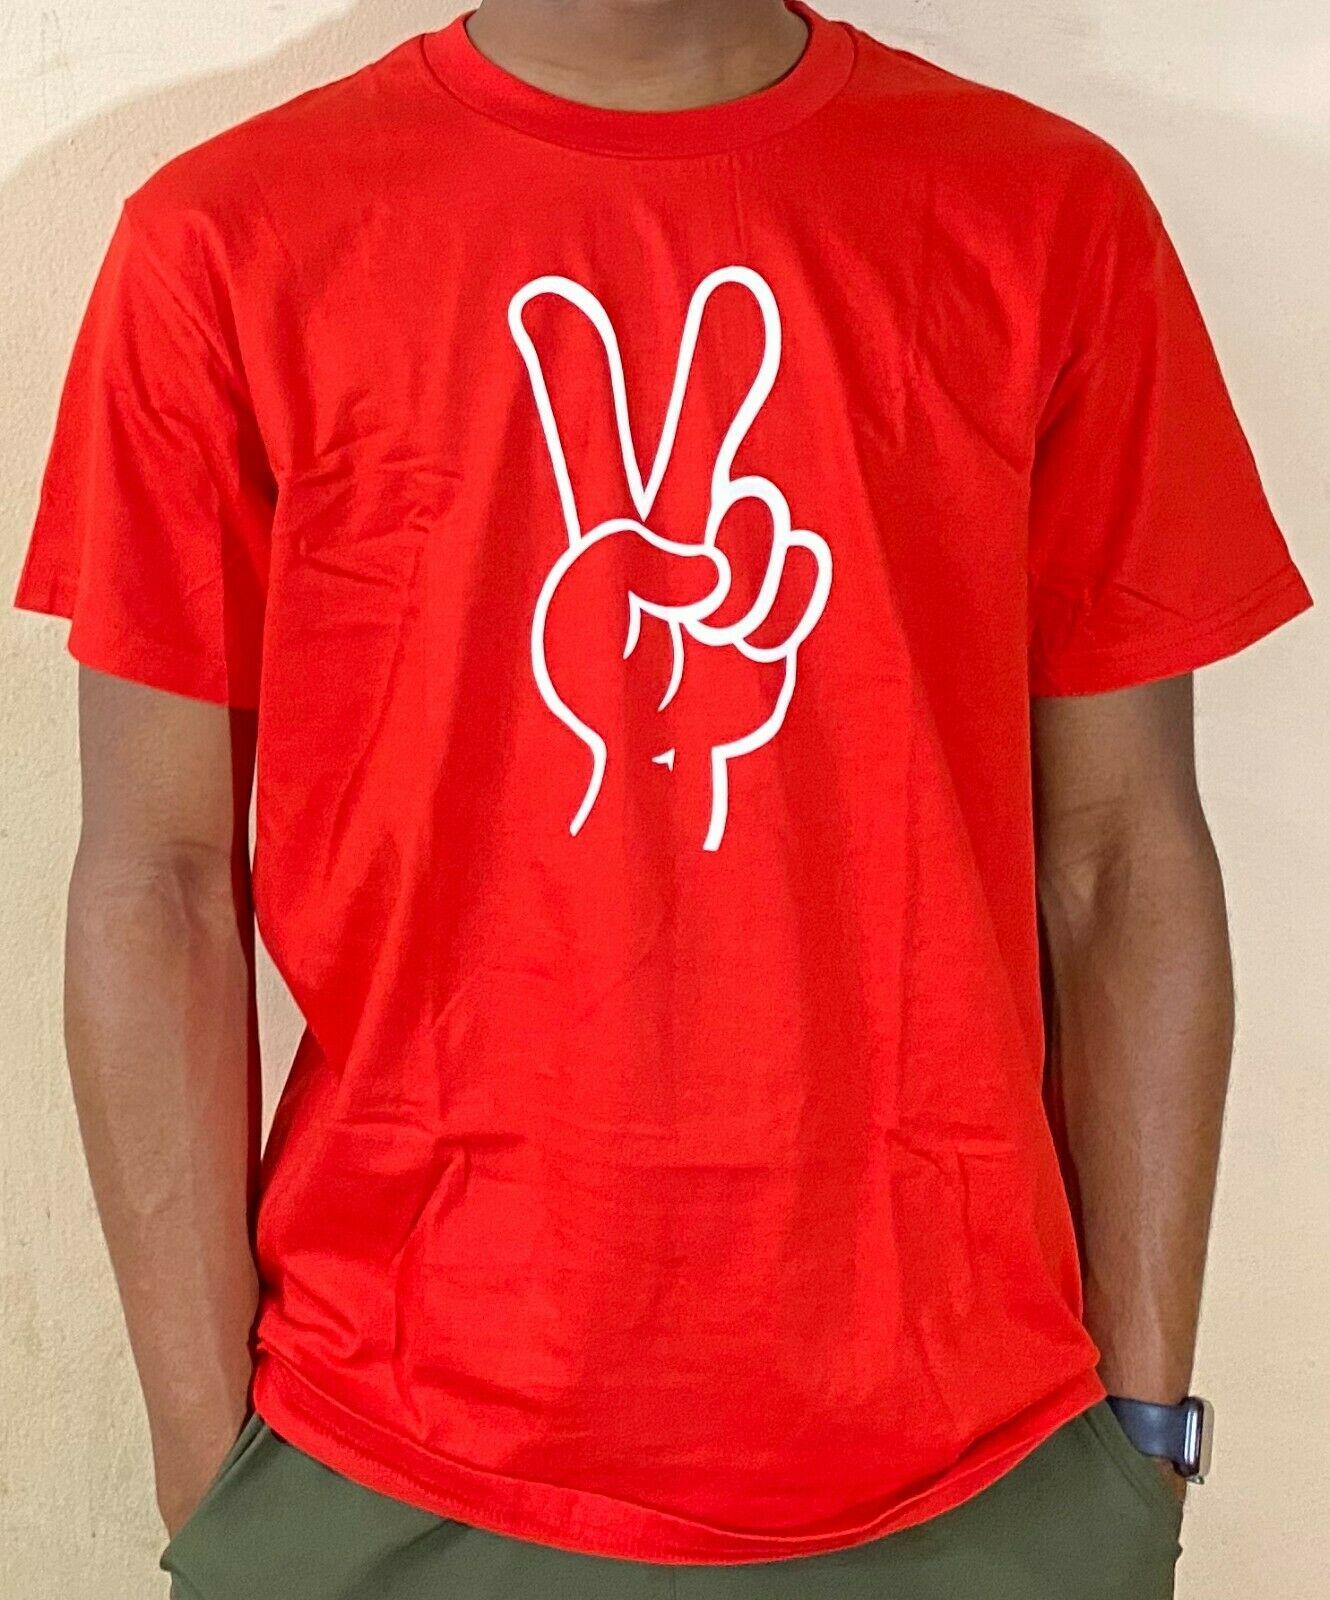 Mens & Womens Comfortable Cotton Fashion Inspirational Athletic T-Shirt Peace